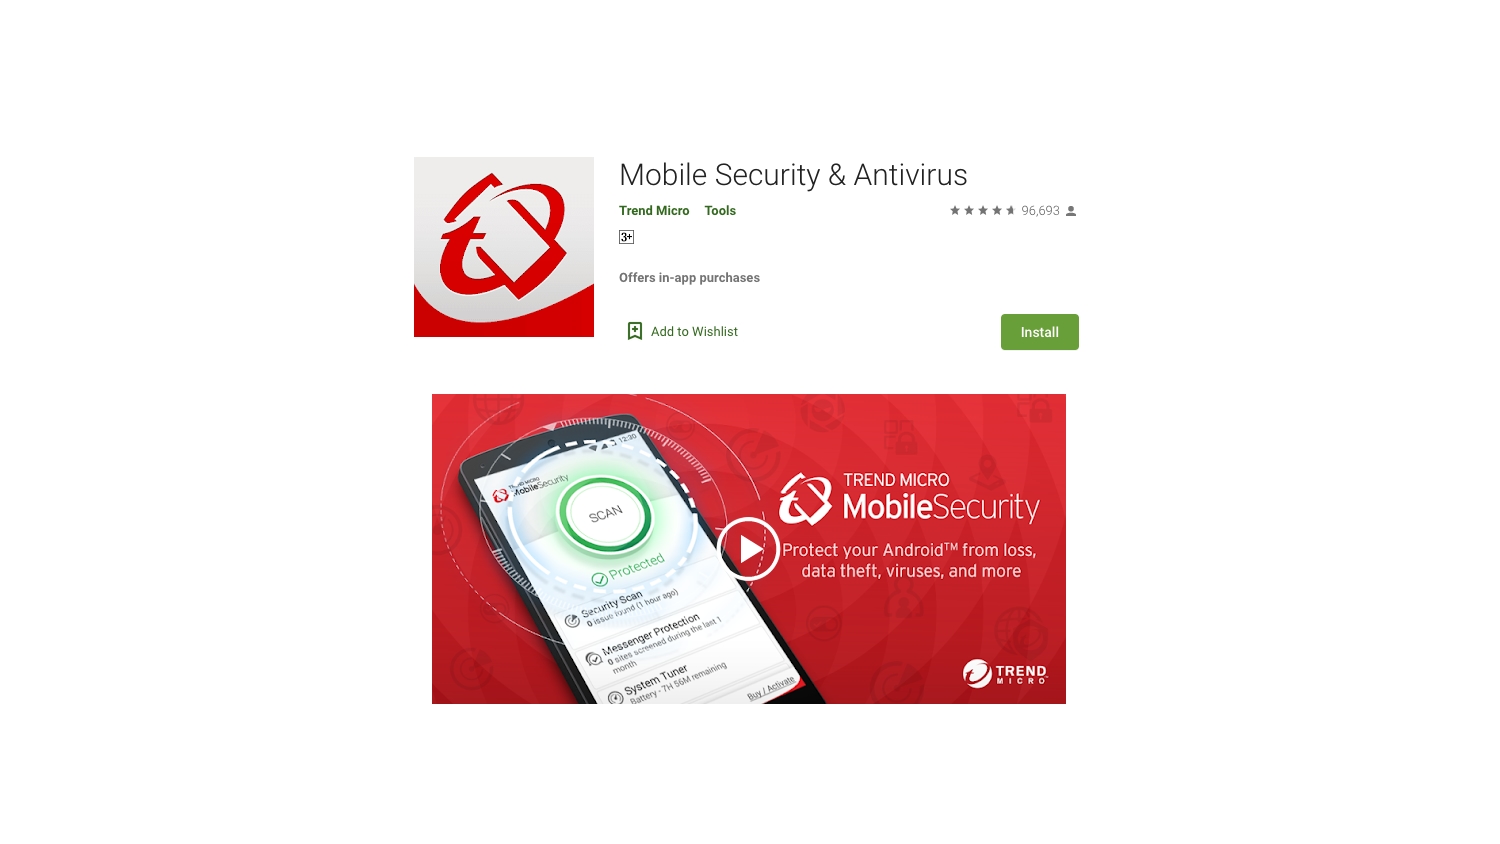 Trend Micro Mobile Security & Antivirus carousel image